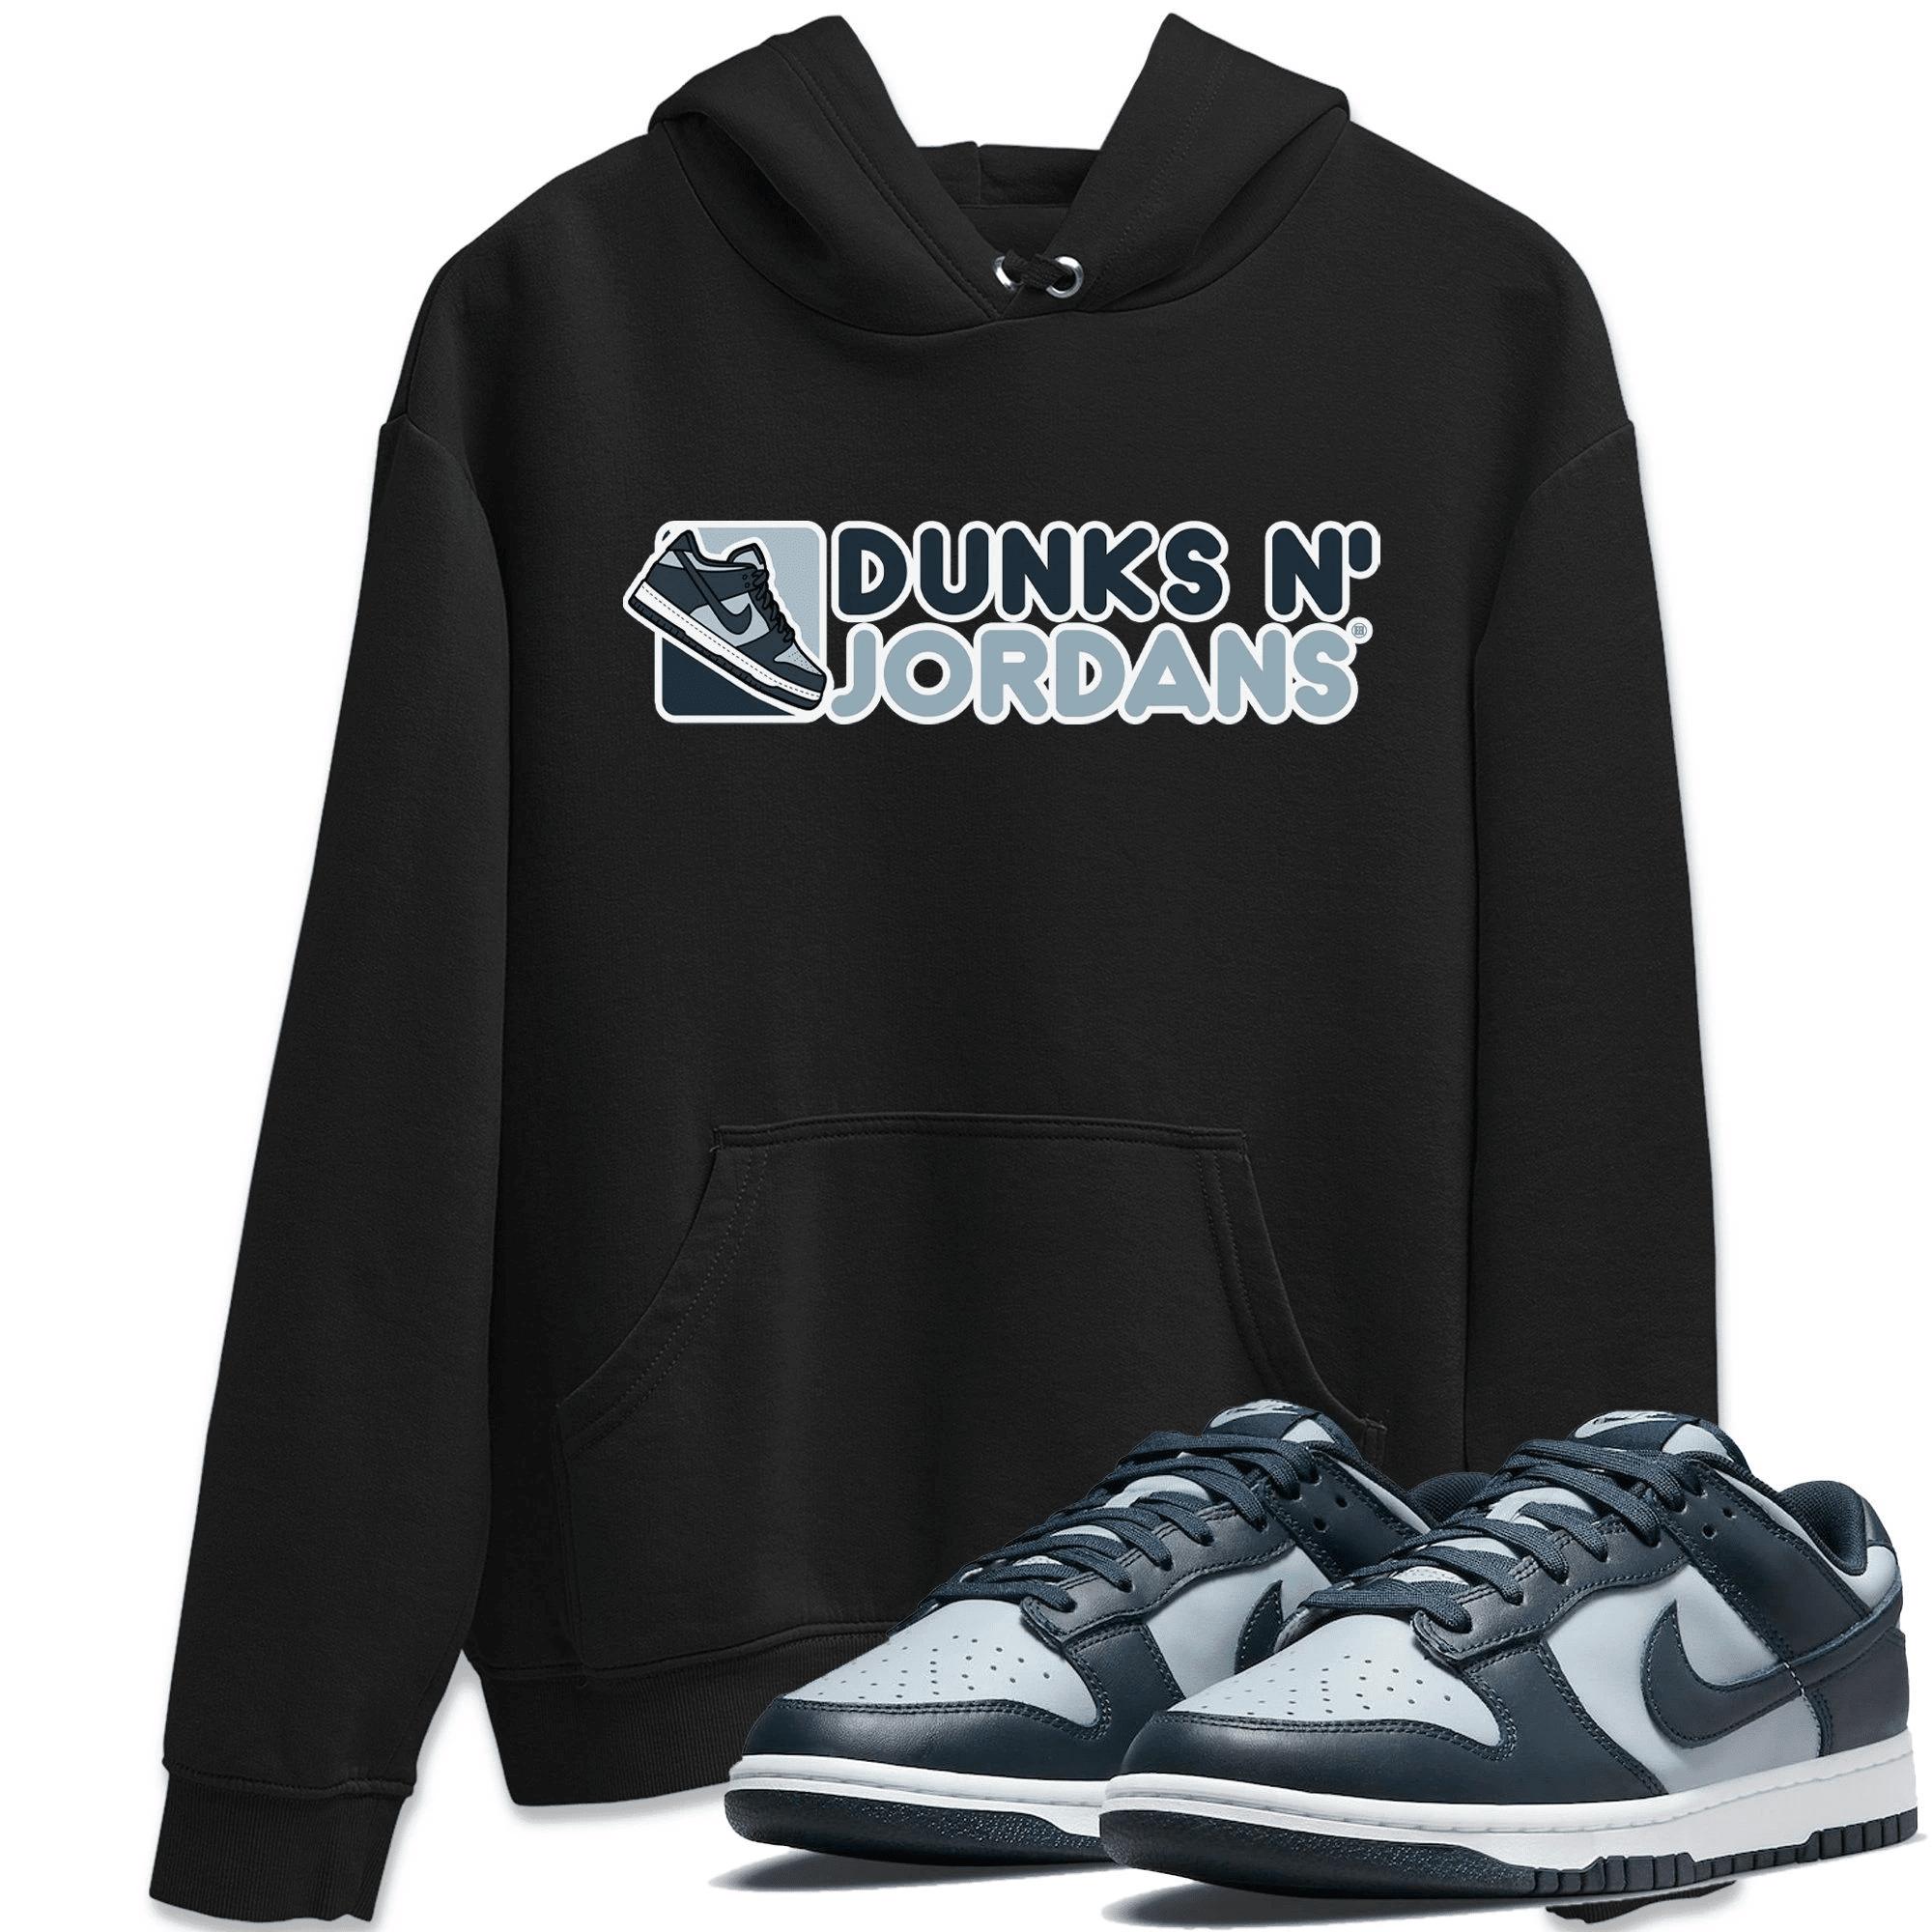 Dunks N Jordans Hoodie - Nike Dunk Championship Grey Outfit